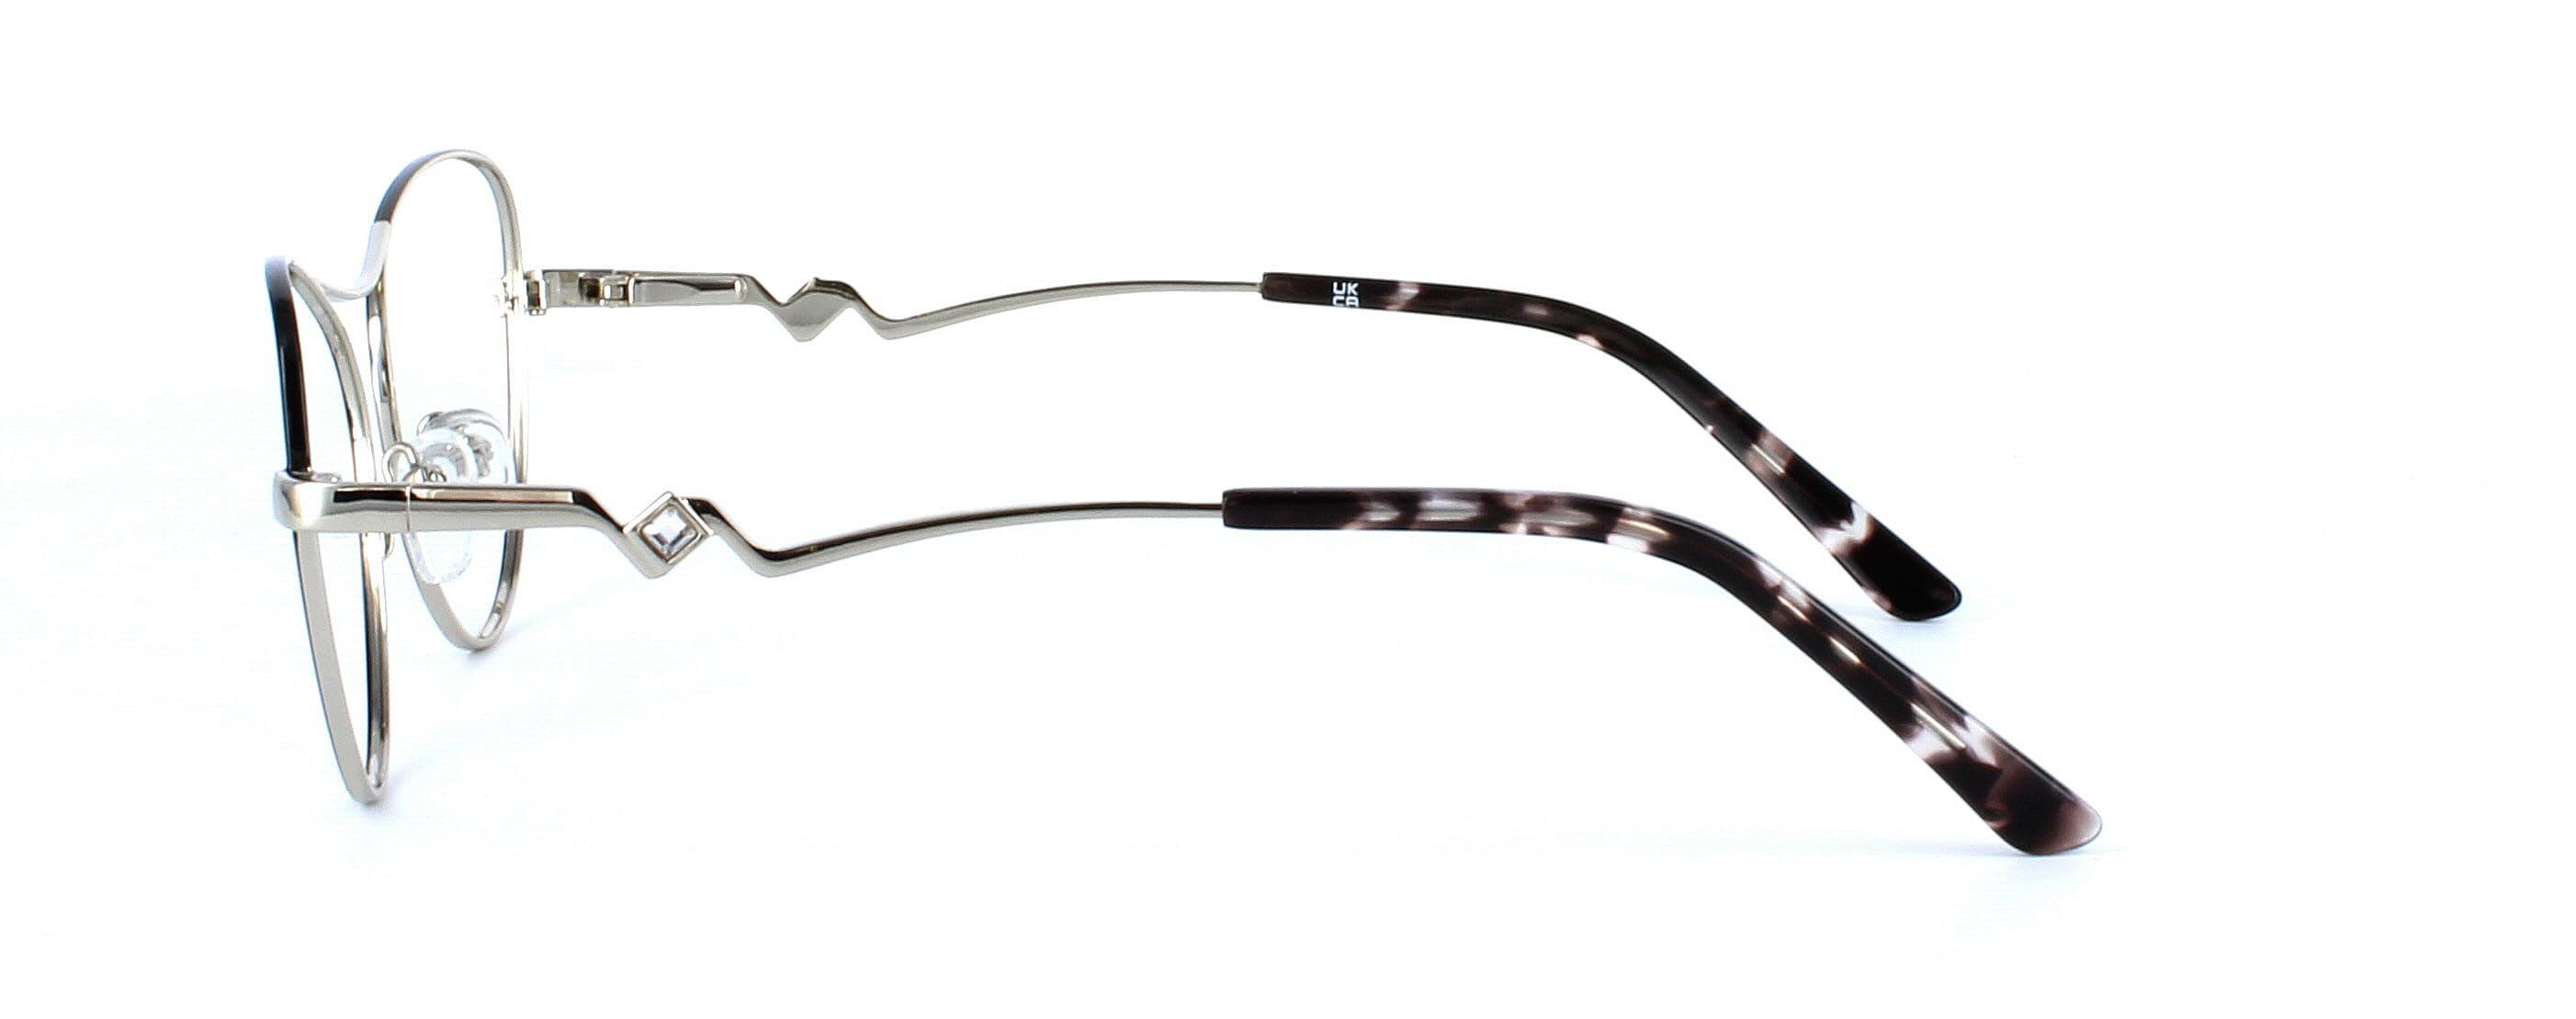 Auriga - Ladies 2-tone black & silver metal glasses - image view 2